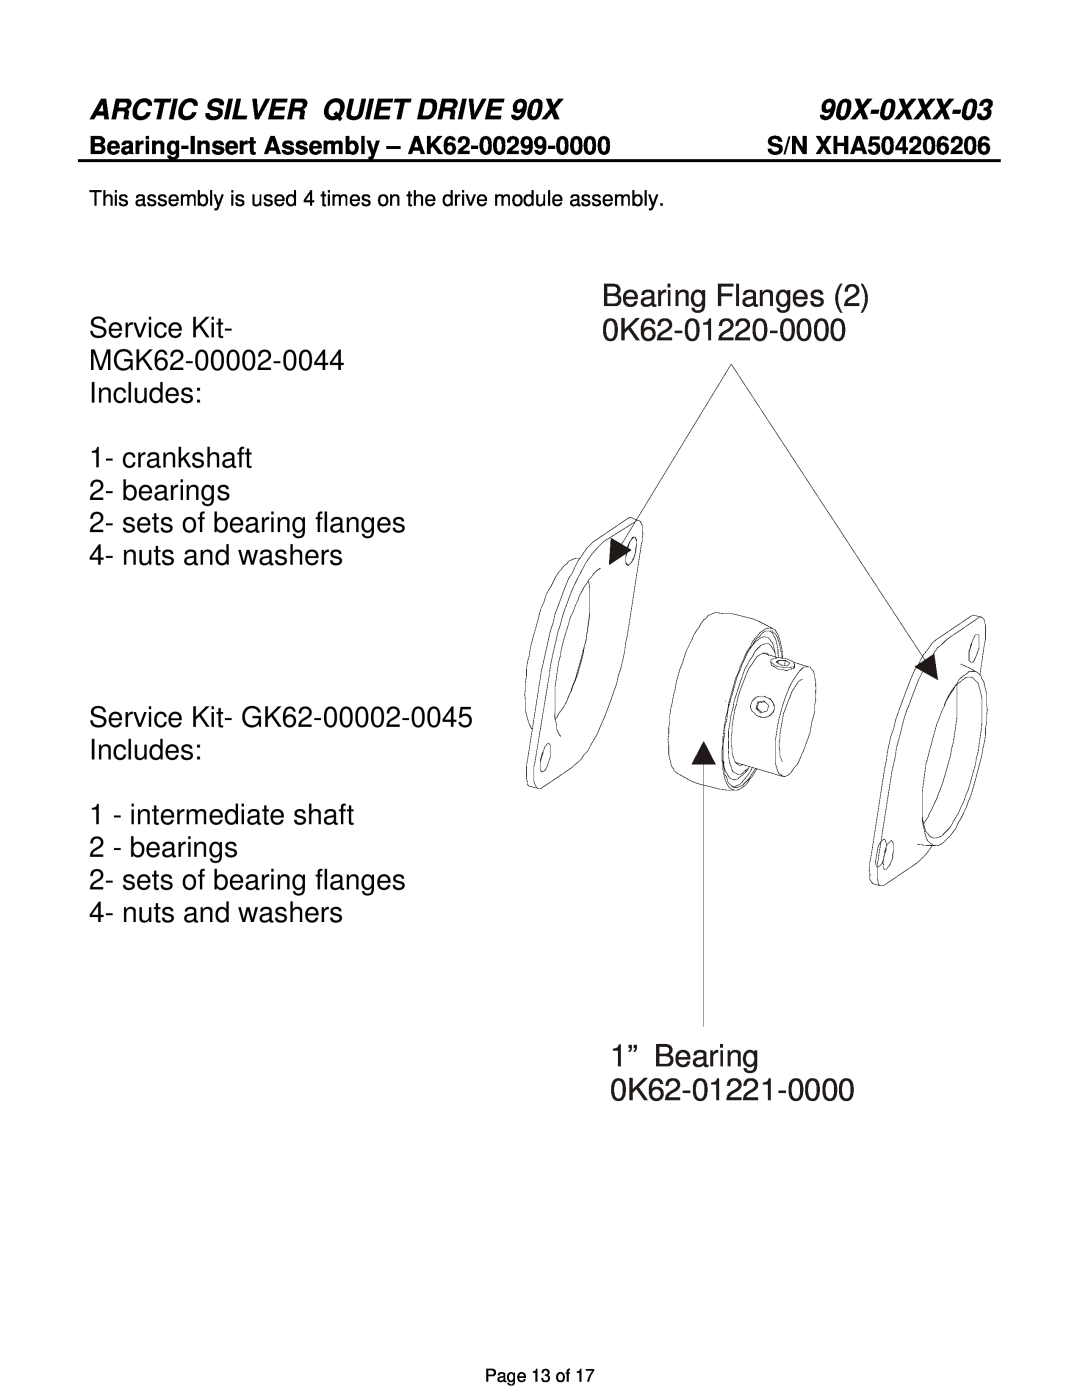 Life Fitness 90X-0XXX-03 manual Bearing Flanges Service Kit-0K62-01220-0000, 1” Bearing 0K62-01221-0000 